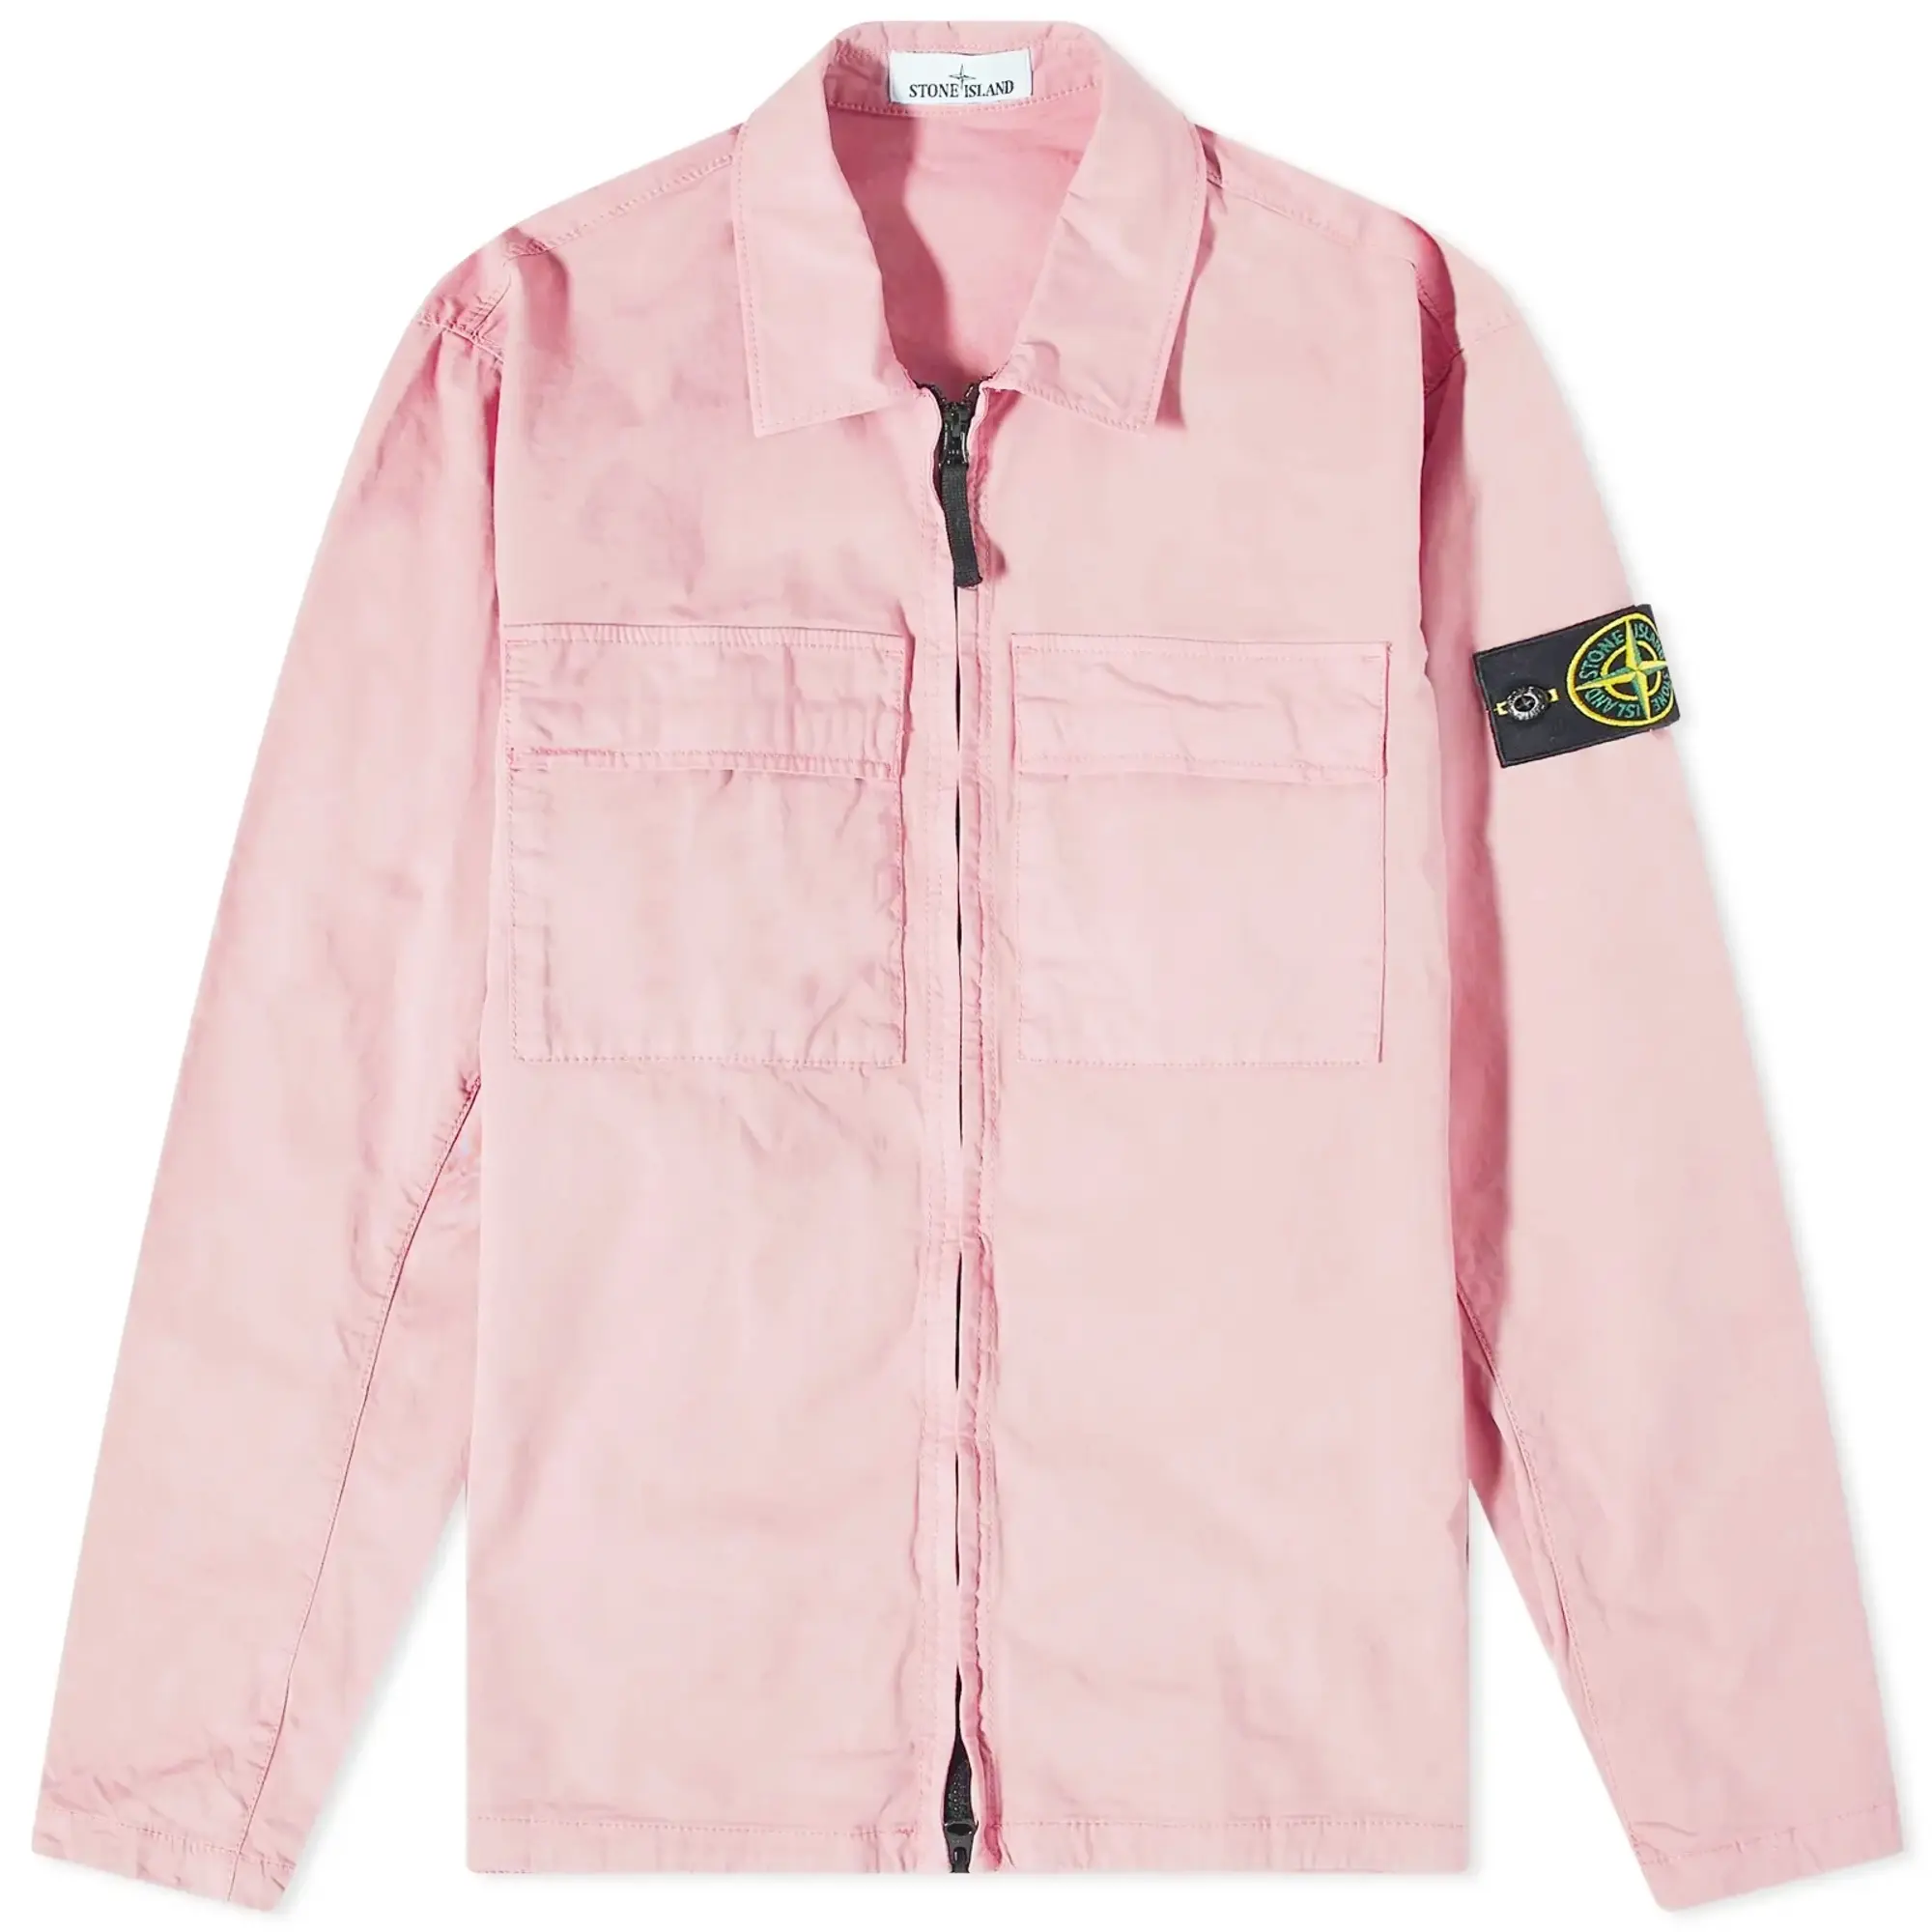 Stone Island Men's Supima Cotton Twill Stretch-TC Zip Shirt Jacket Pink